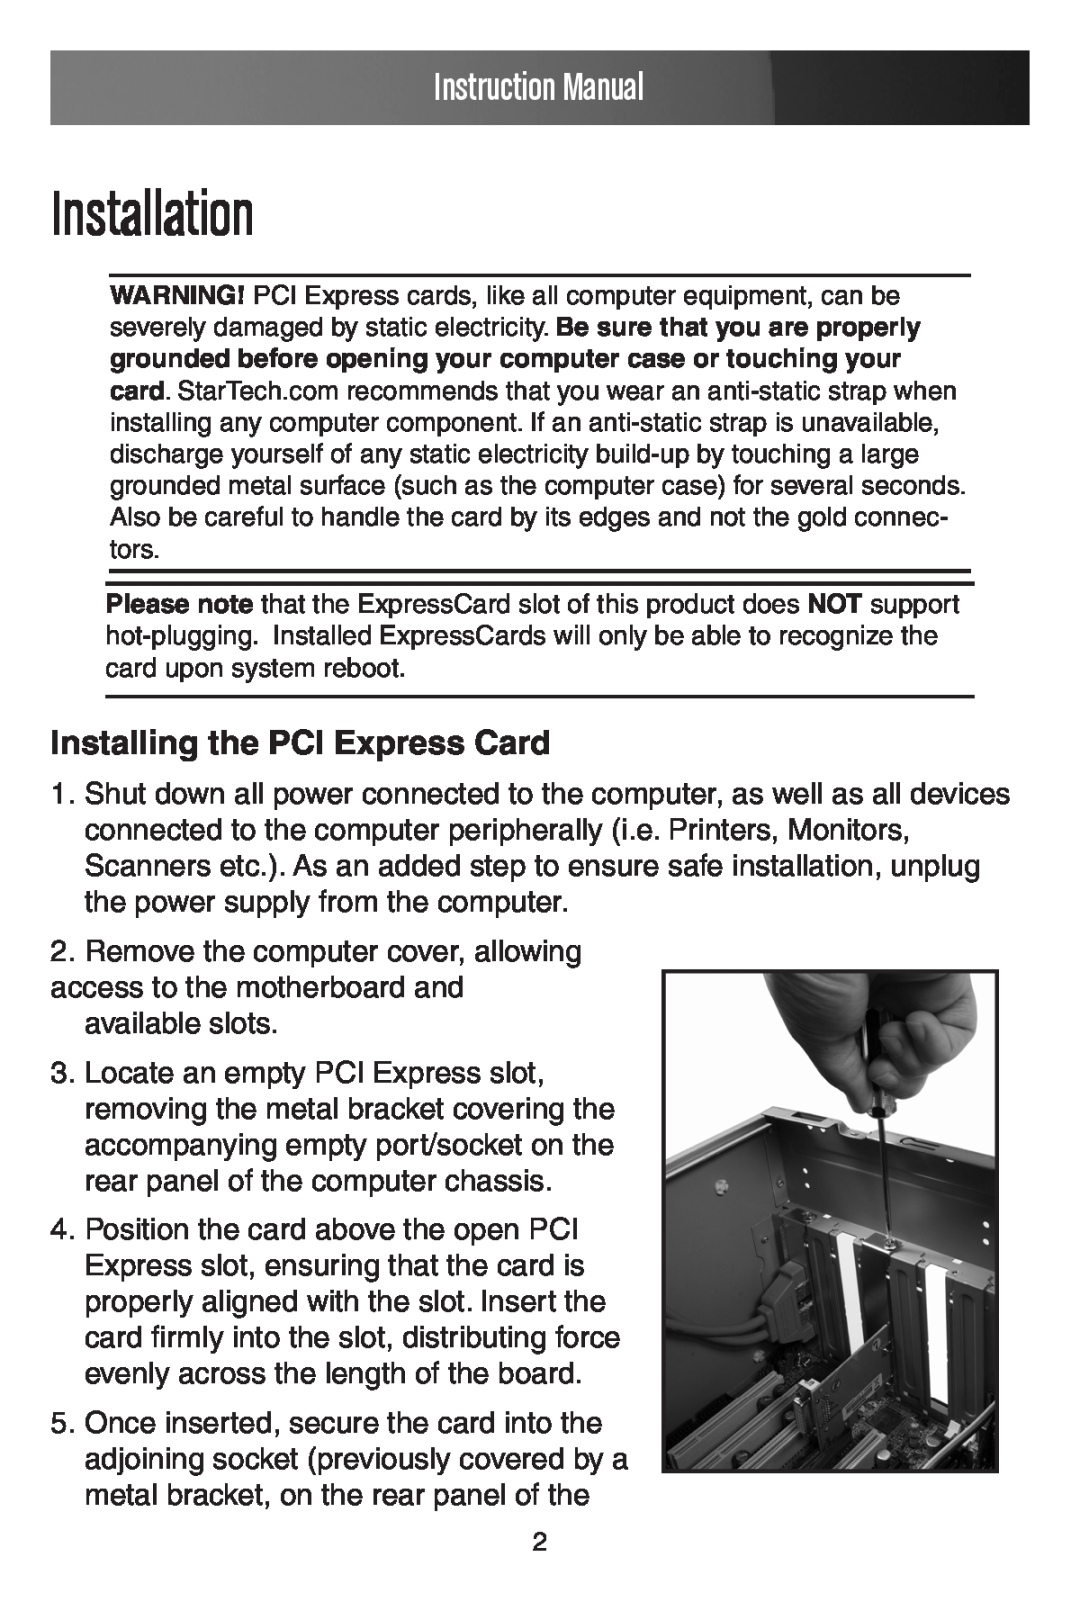 StarTech.com PEX2EC35 manual Installation, Installing the PCI Express Card, Instruction Manual 